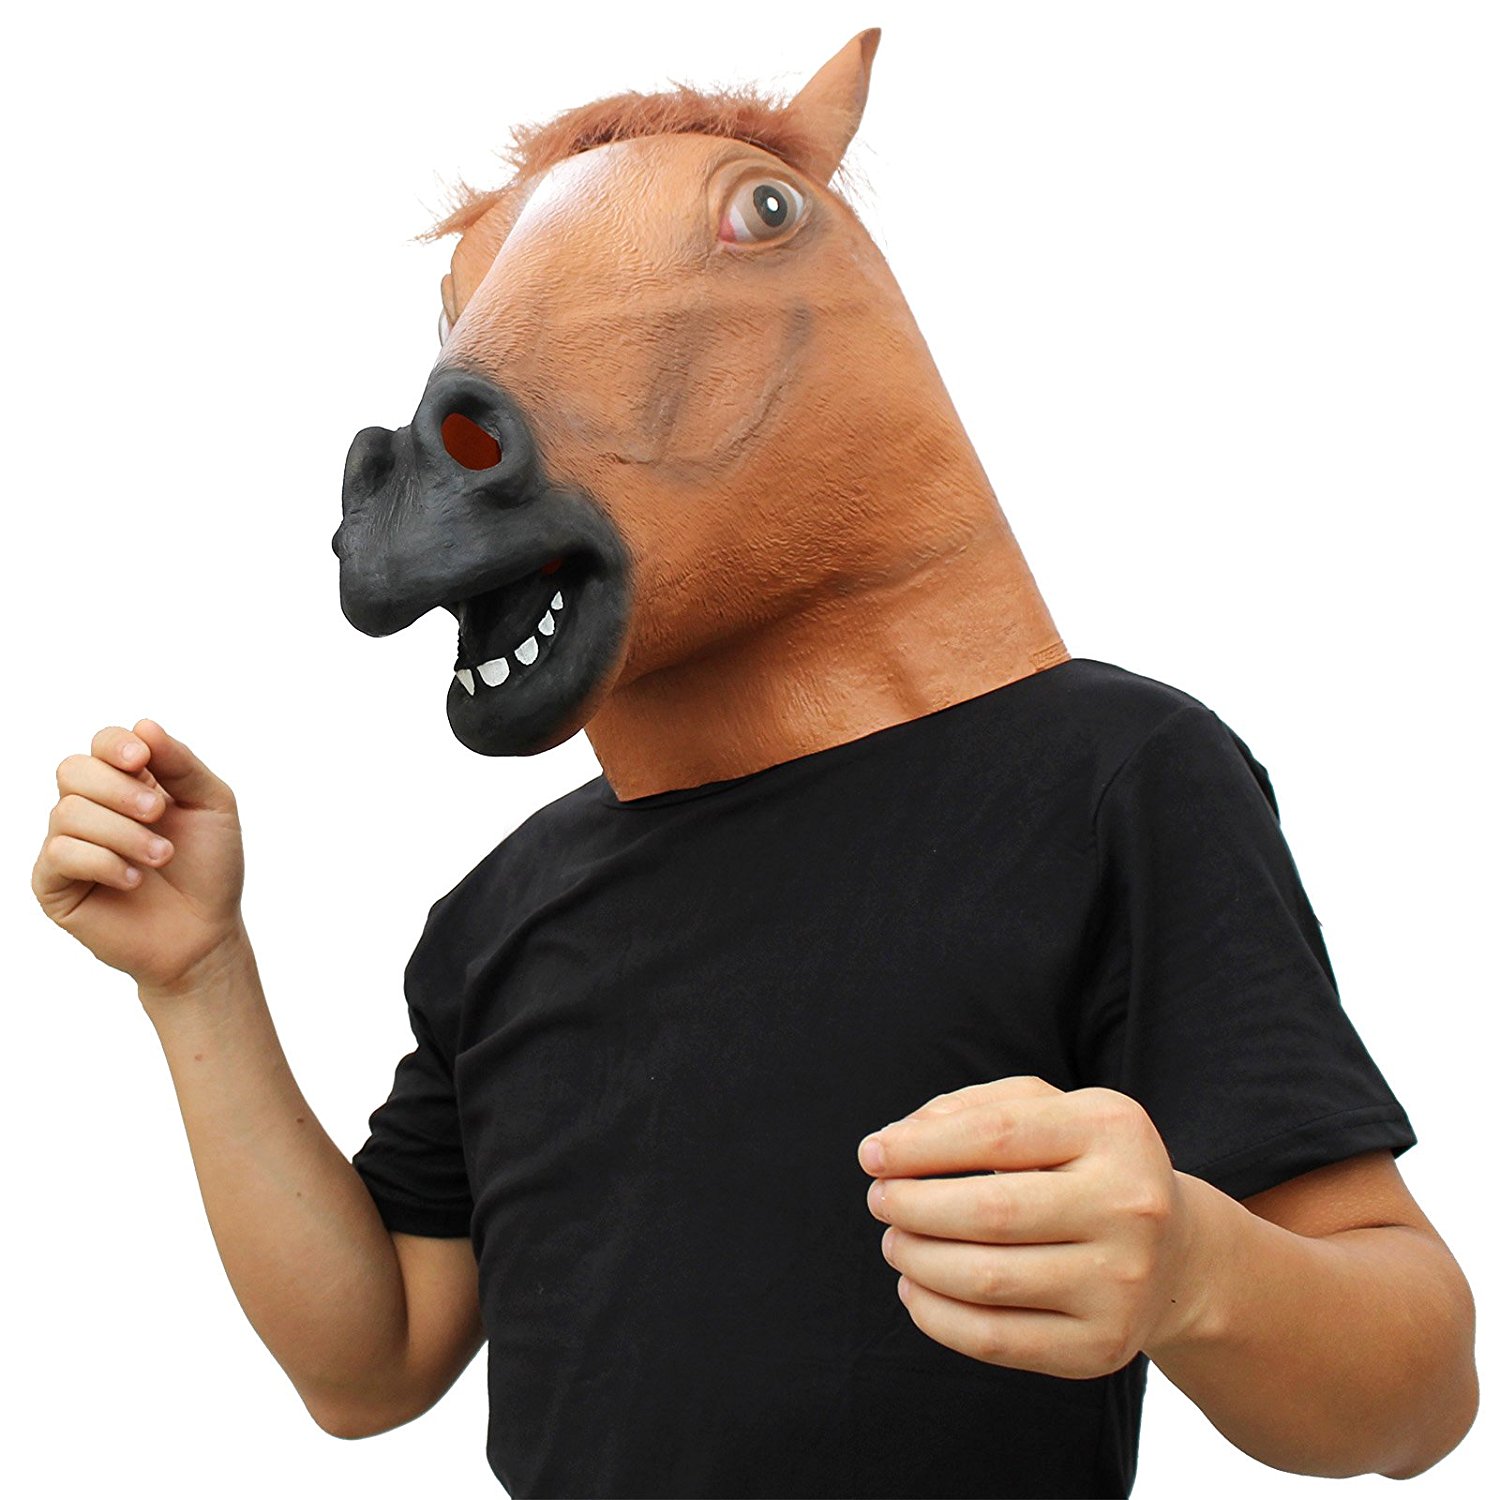 głowa konia jako maska